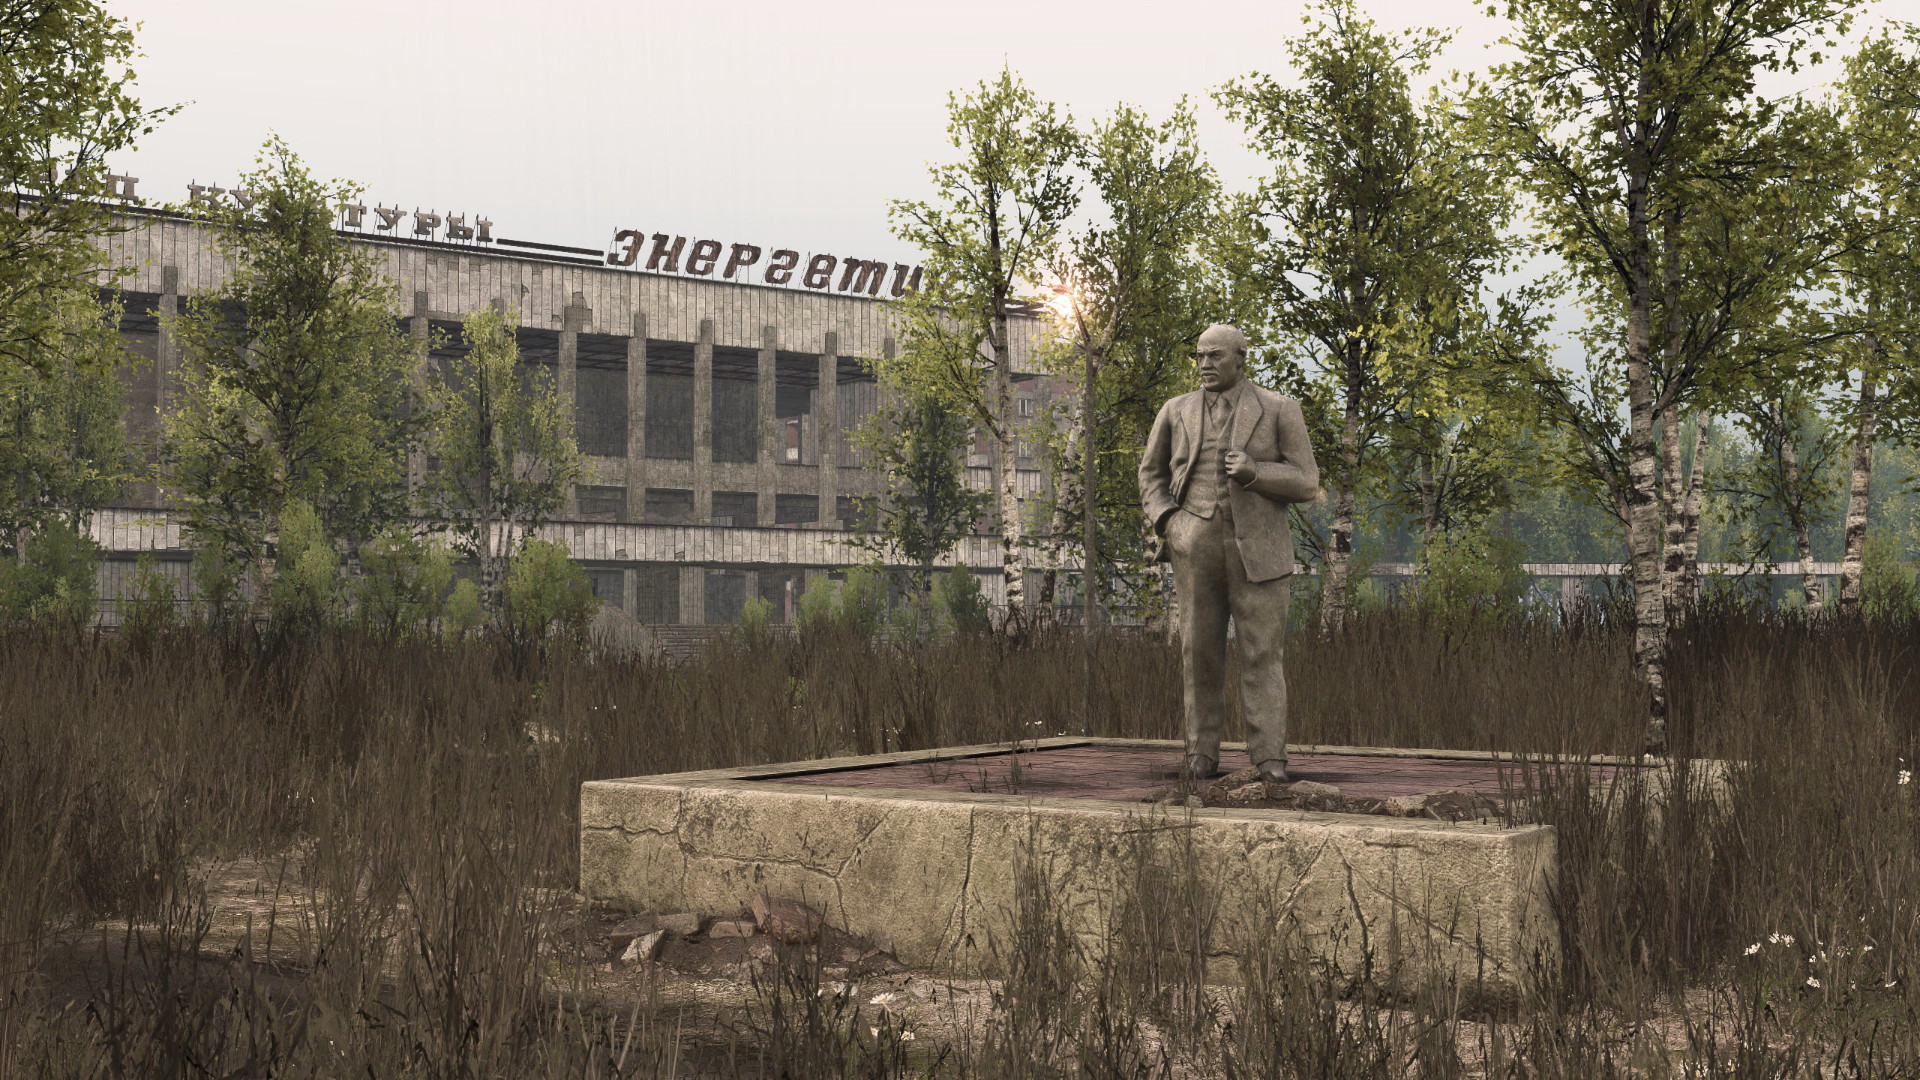 Spintires: Chernobyl - screenshot 9